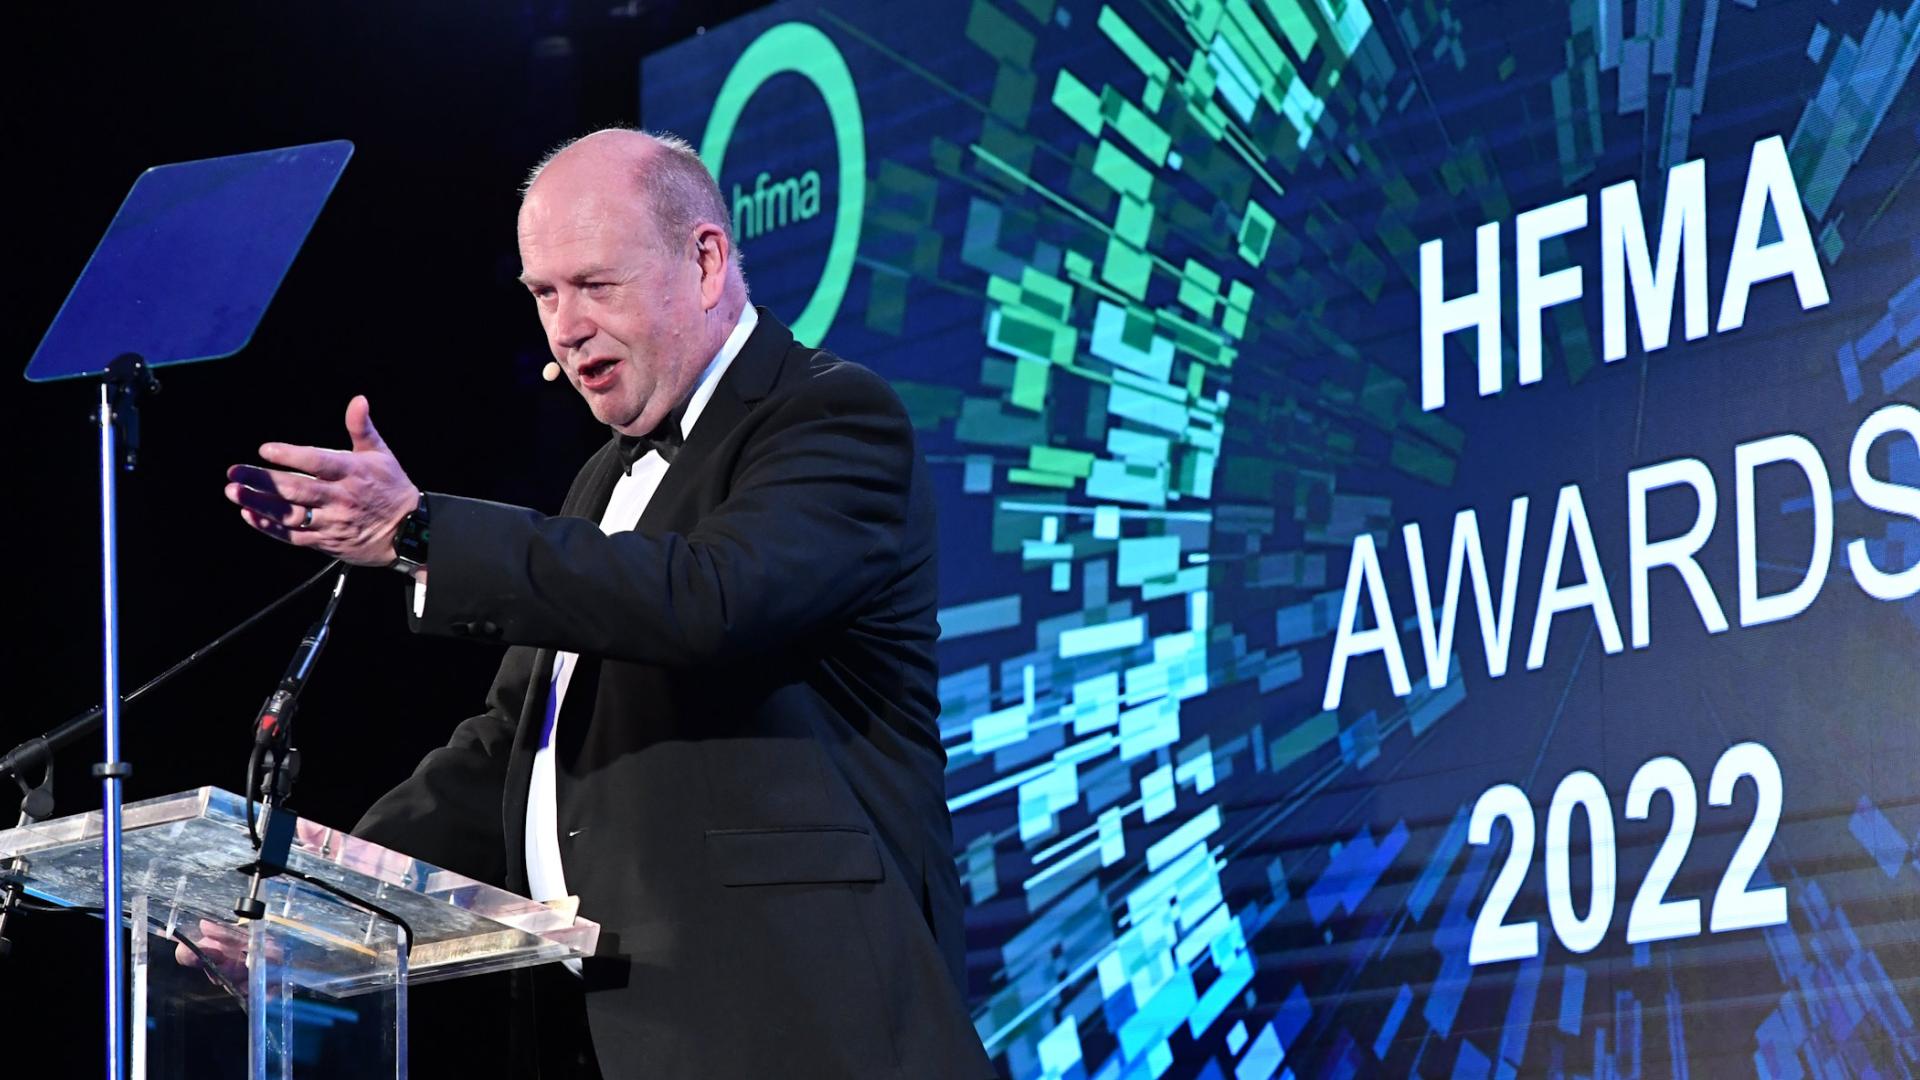 Mark Knight presenting the HFMA Awards in 2022